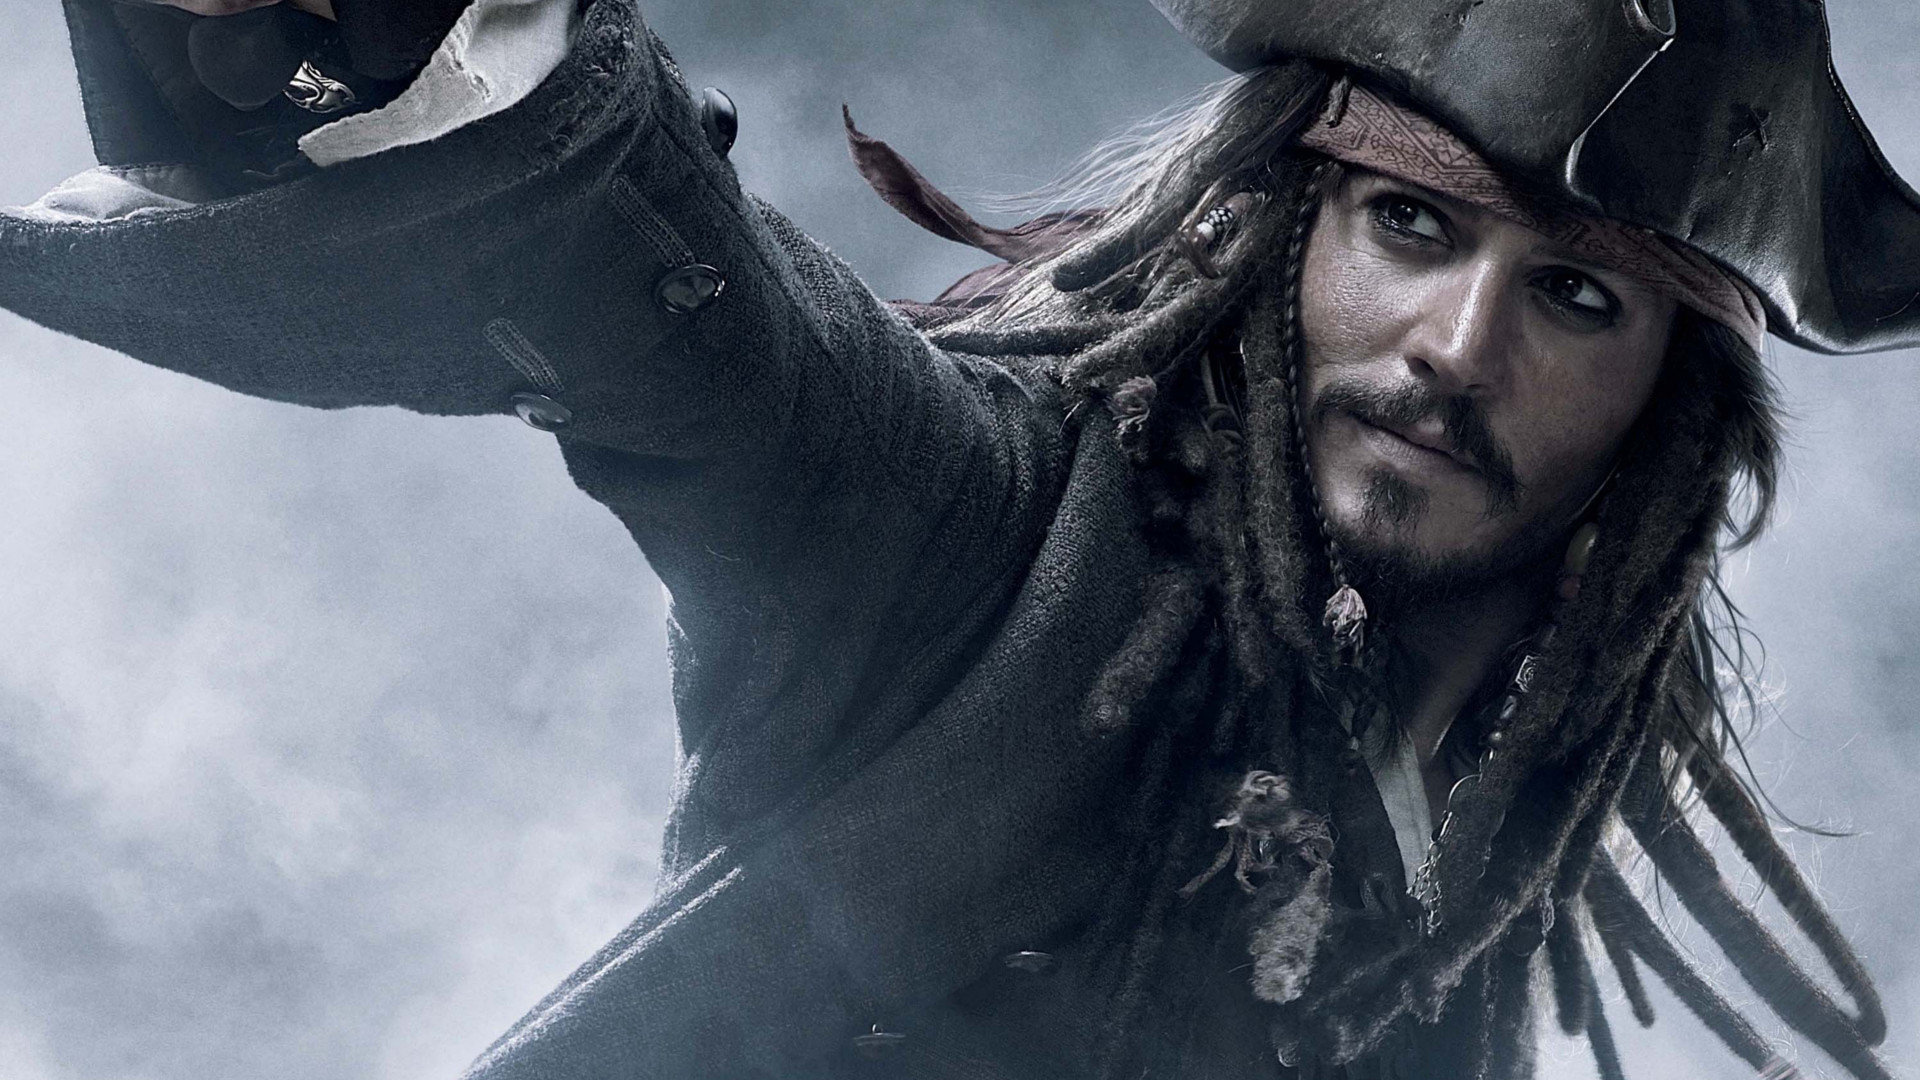 Johnny Depp: Captain Jack Sparrow, The legendary pirate of the Seven Seas. 1920x1080 Full HD Wallpaper.